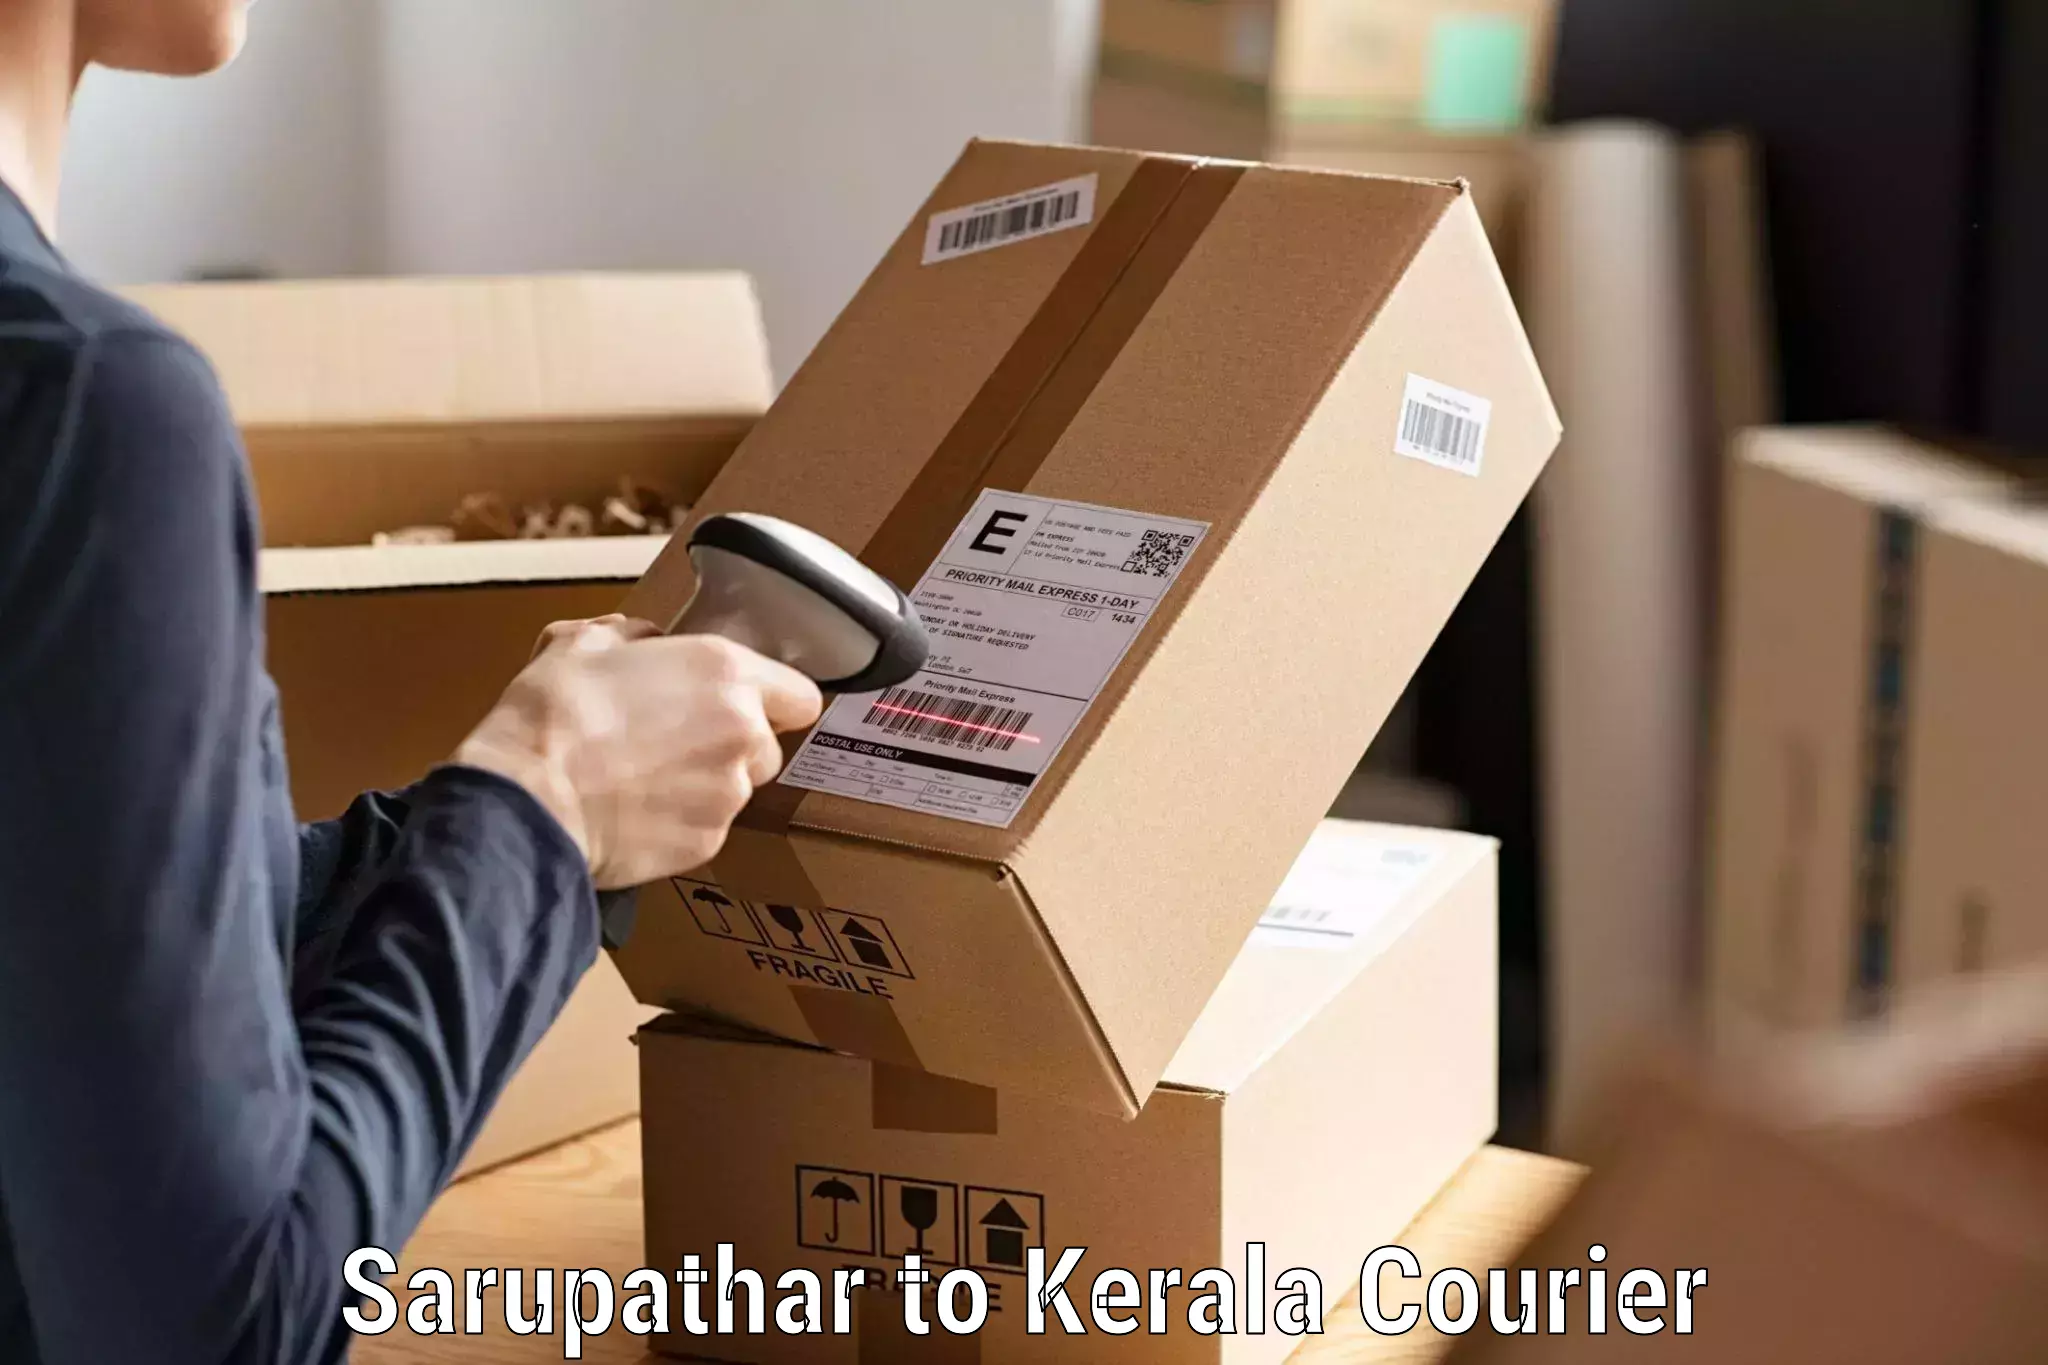 Courier service innovation Sarupathar to Kerala